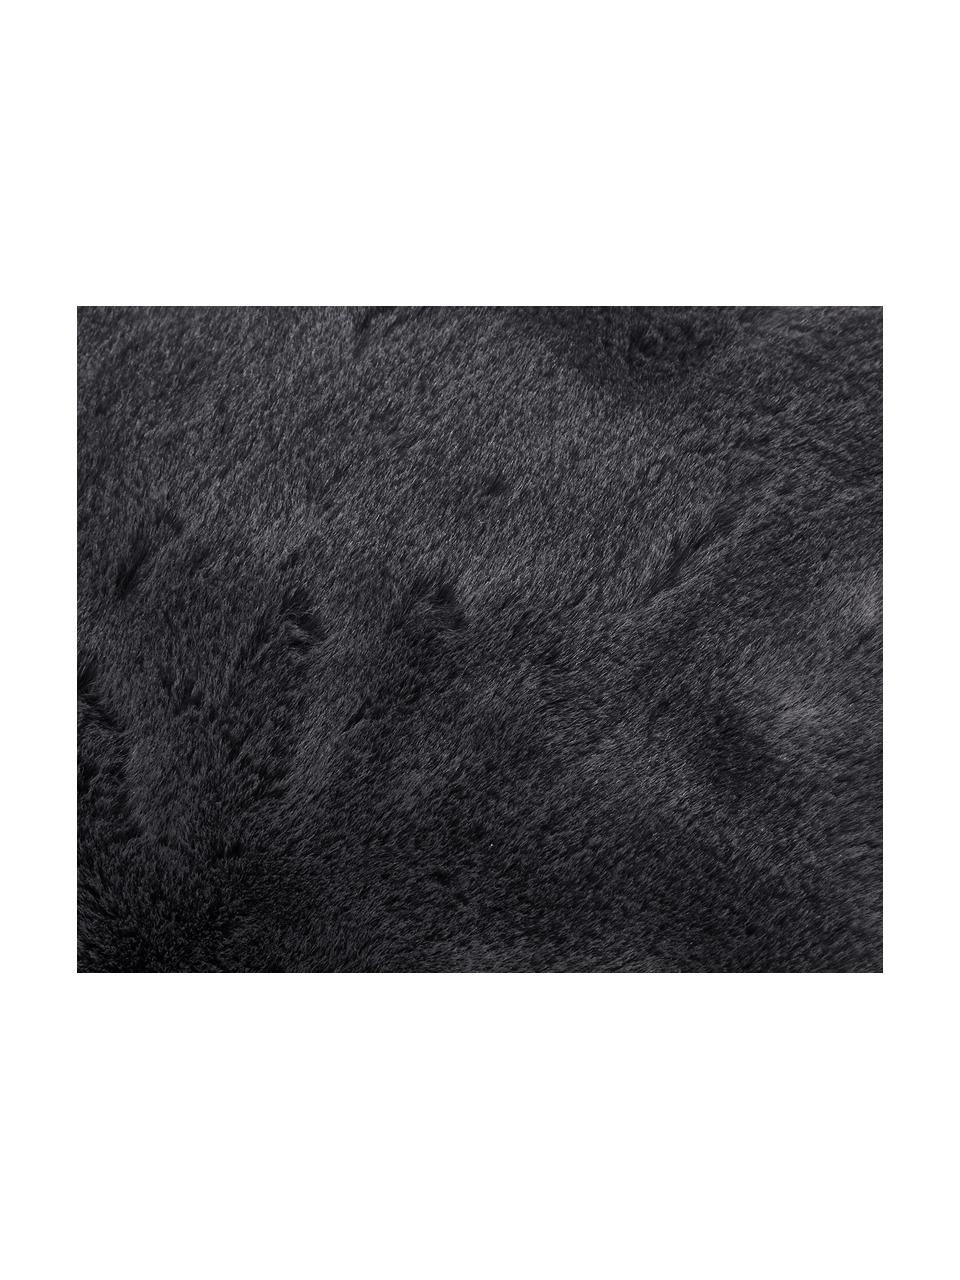 Flauschige Kunstfell-Kissenhülle Mette in Dunkelgrau, glatt, Vorderseite: 100% Polyester, Rückseite: 100% Polyester, Dunkelgrau, 45 x 45 cm